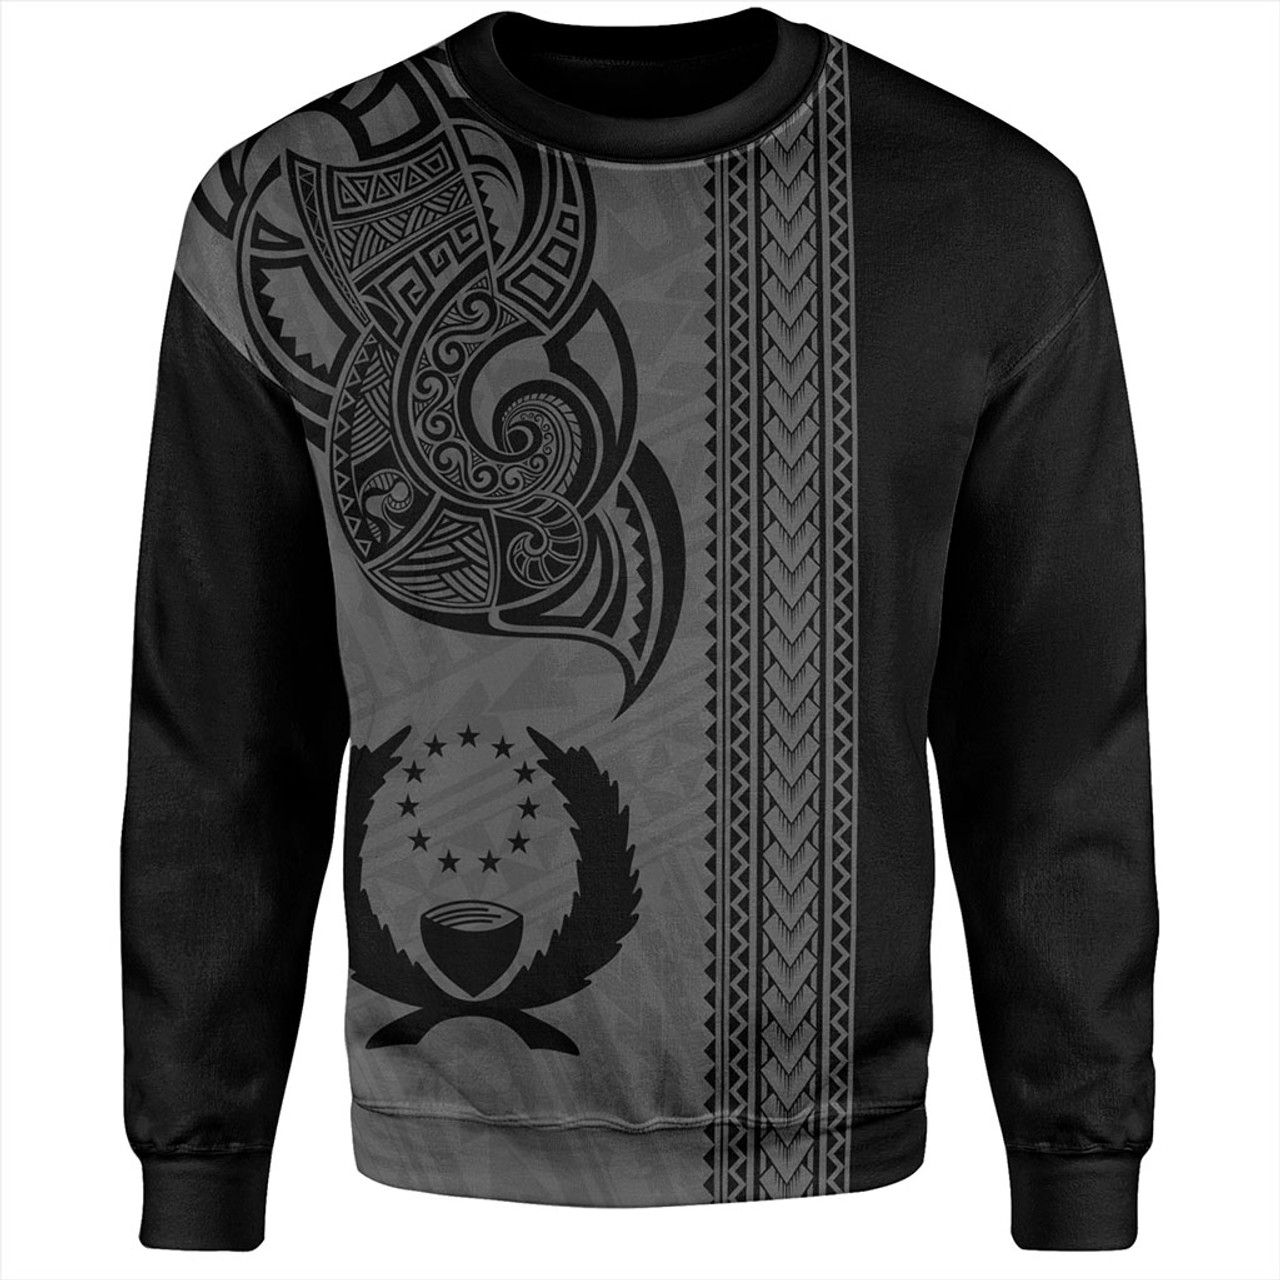 Pohnpei State Sweatshirt Polynesia Coat Of Arms Tribal Tattoo